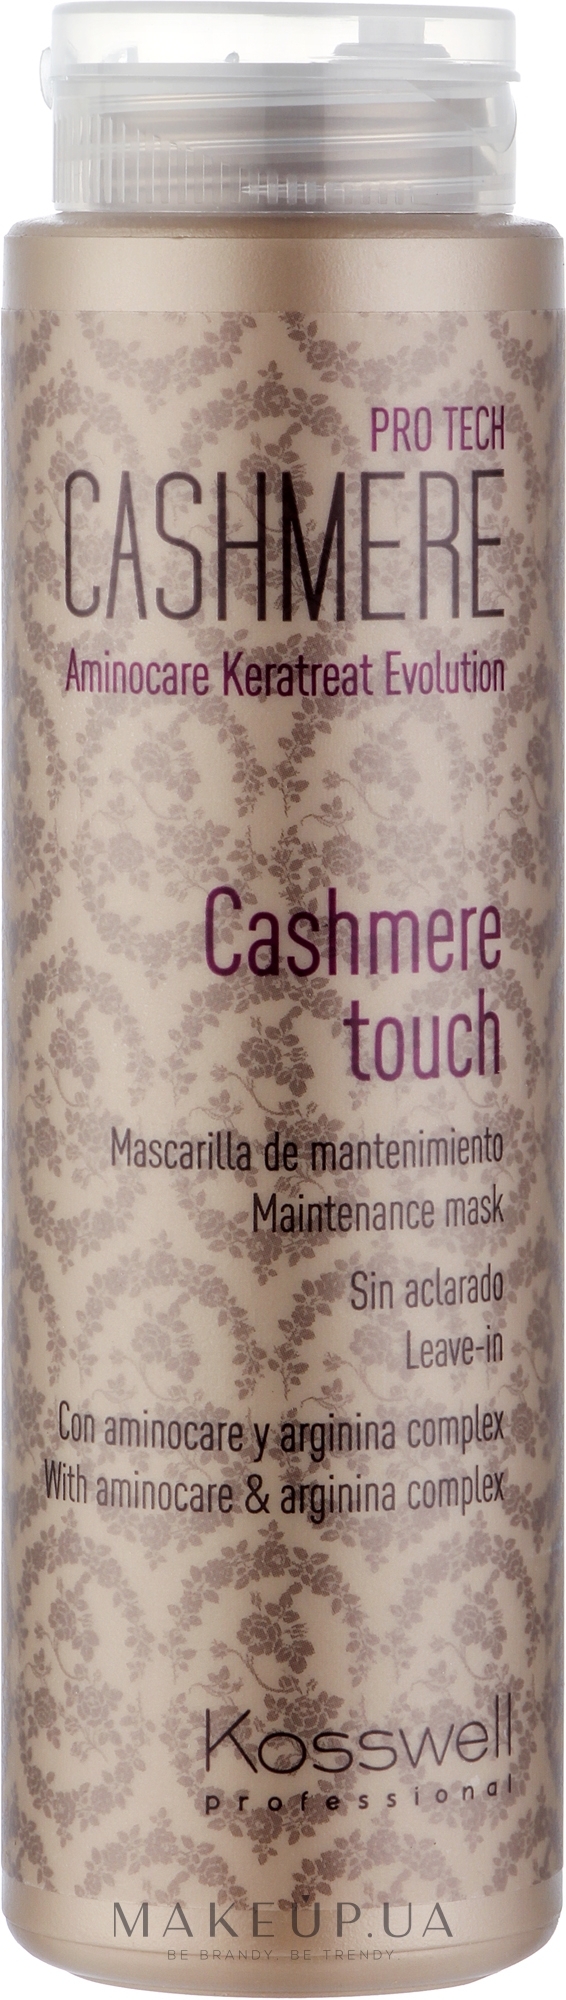 Маска для гладкості волосся, незмивна - Kosswell Professional Cashmere Touch — фото 250ml